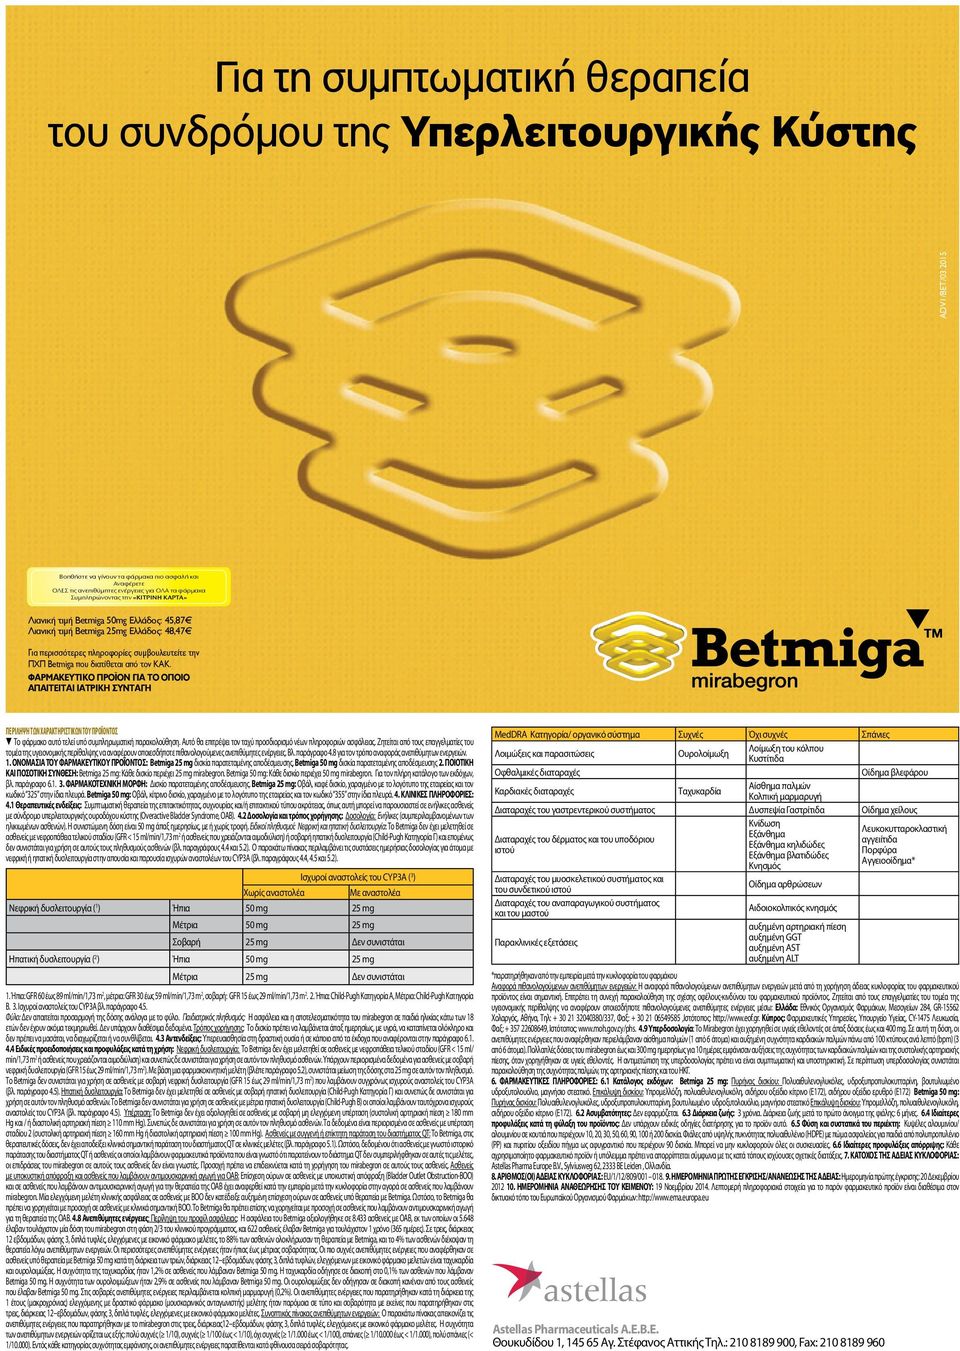 Betmiga 25mg Ελλάδος: 48,47 Για περισσότερες πληροφορίες συµβουλευτείτε την ΠΧΠ Betmiga που διατίθεται από τον ΚΑΚ.